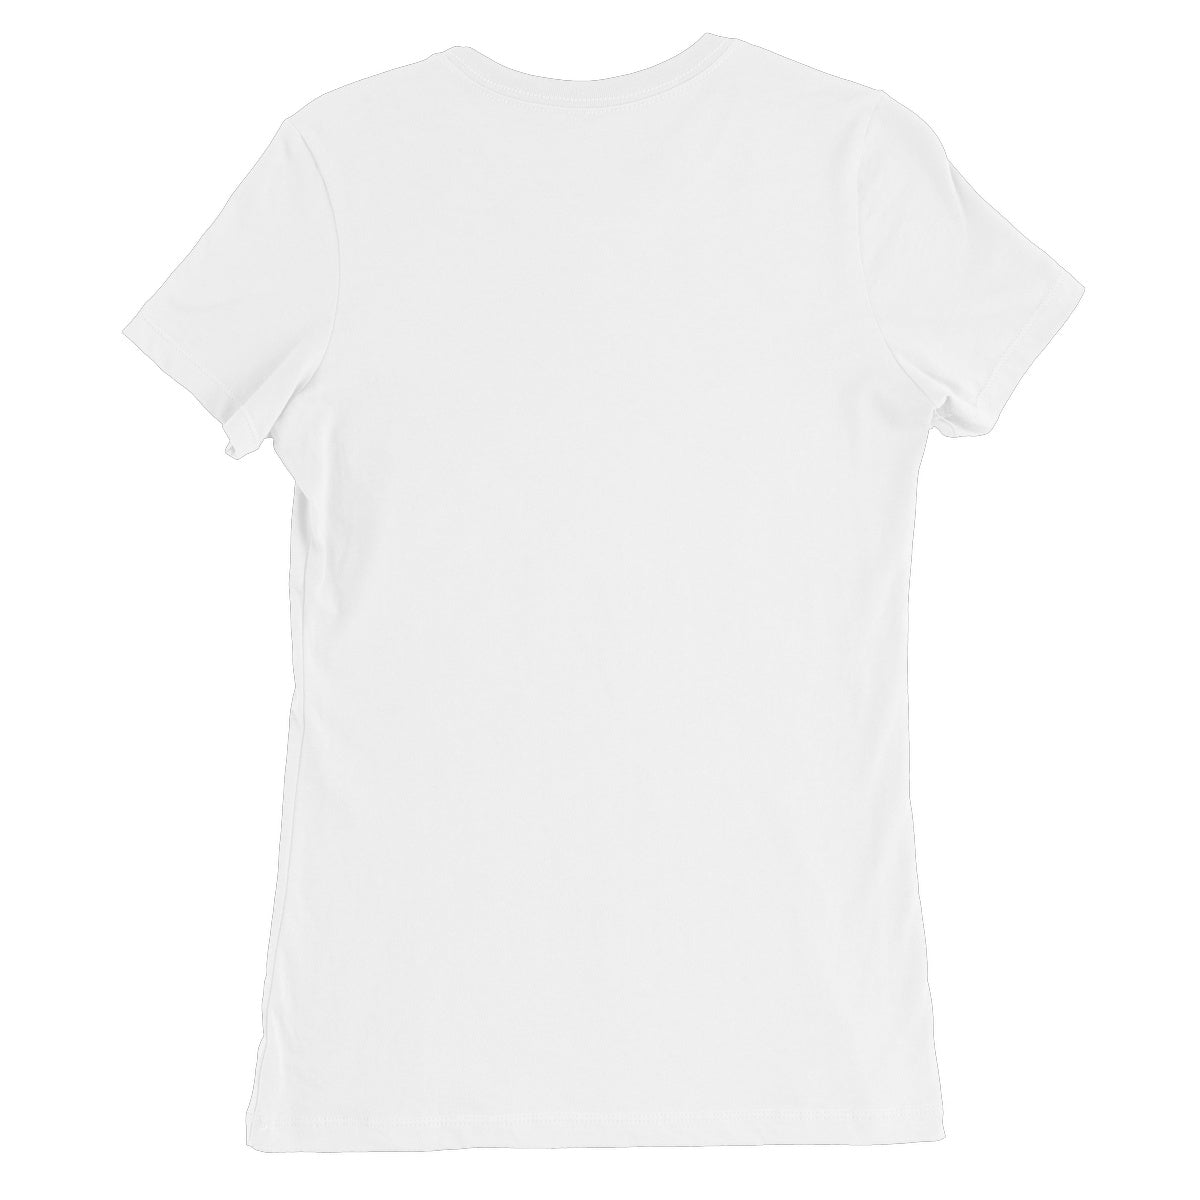 Loxodromes, Autumn Women's Favourite T-Shirt